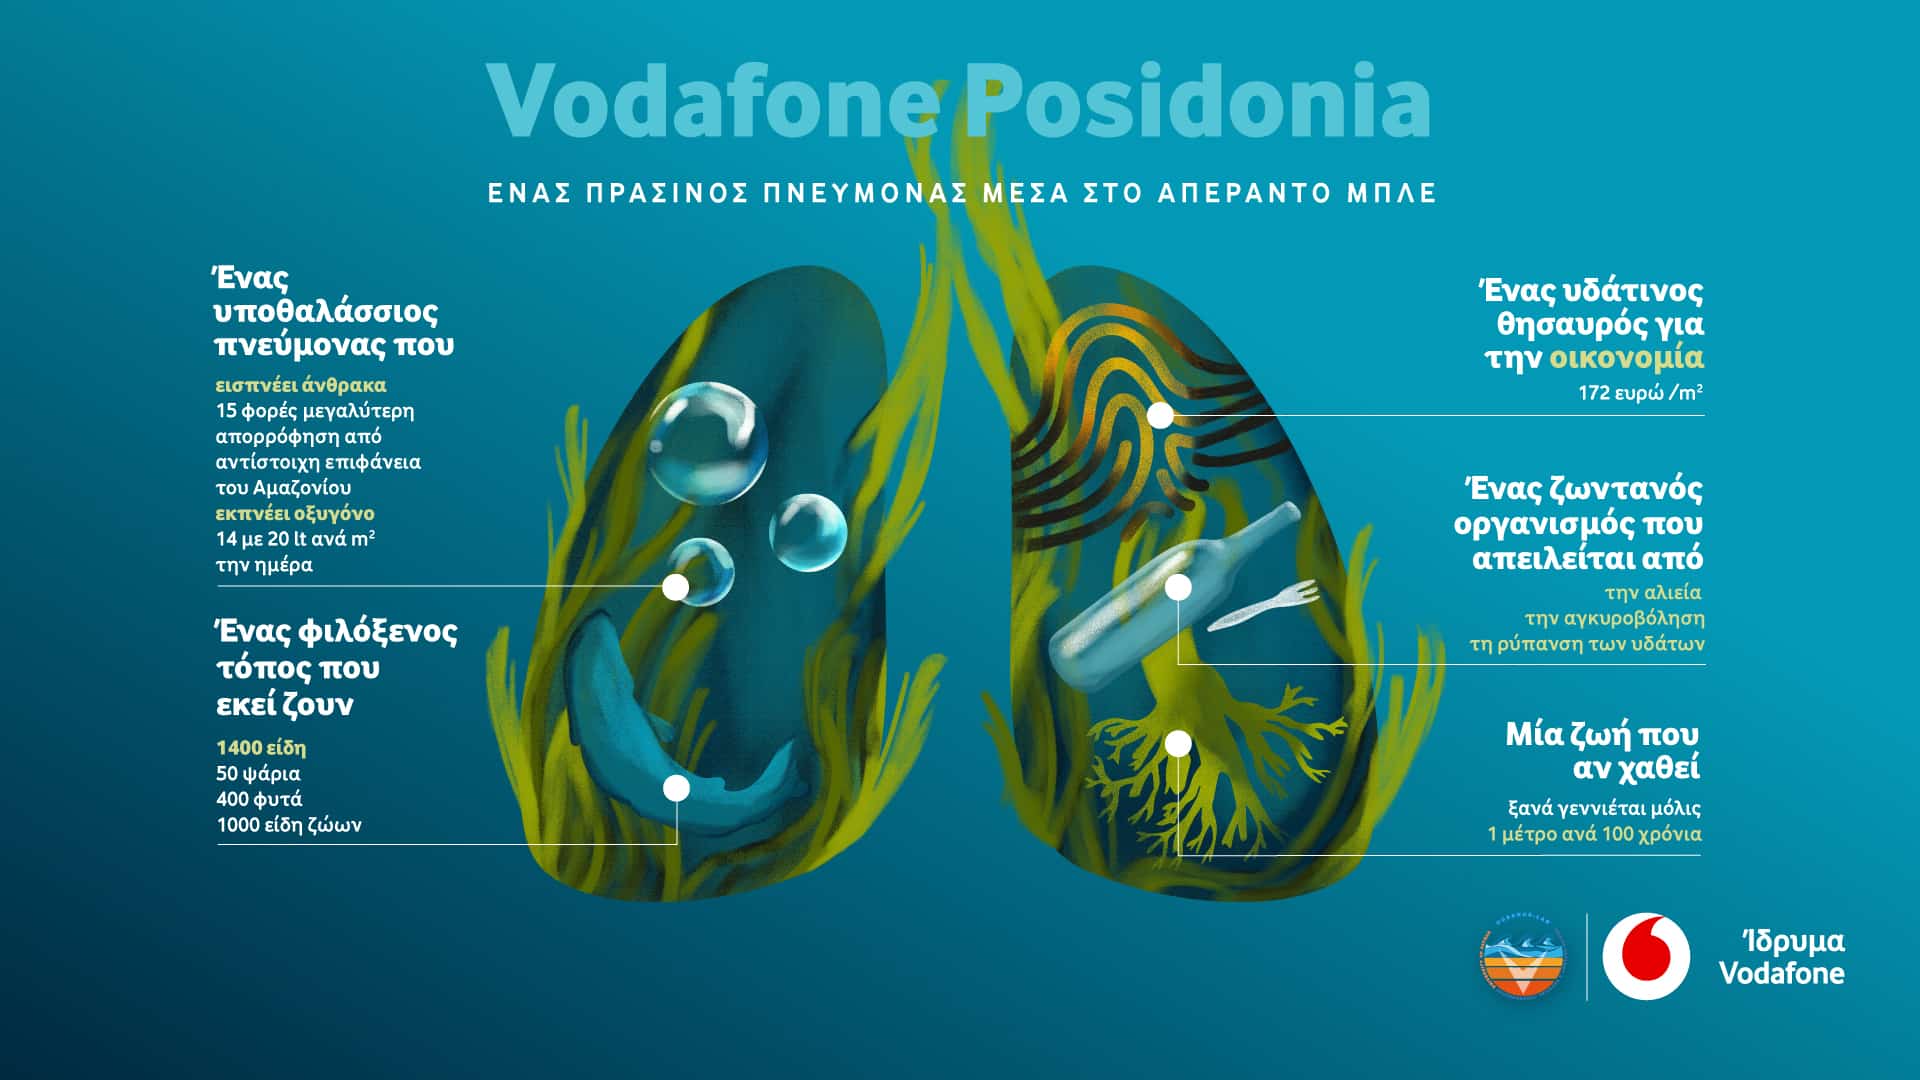 , VODAFONE POSIDONIA: Το Ίδρυμα Vodafone εγκαινιάζει το νέο του περιβαλλοντικό πρόγραμμα για την χαρτογράφηση και προστασία της Ποσειδωνίας στις ελληνικές θάλασσες